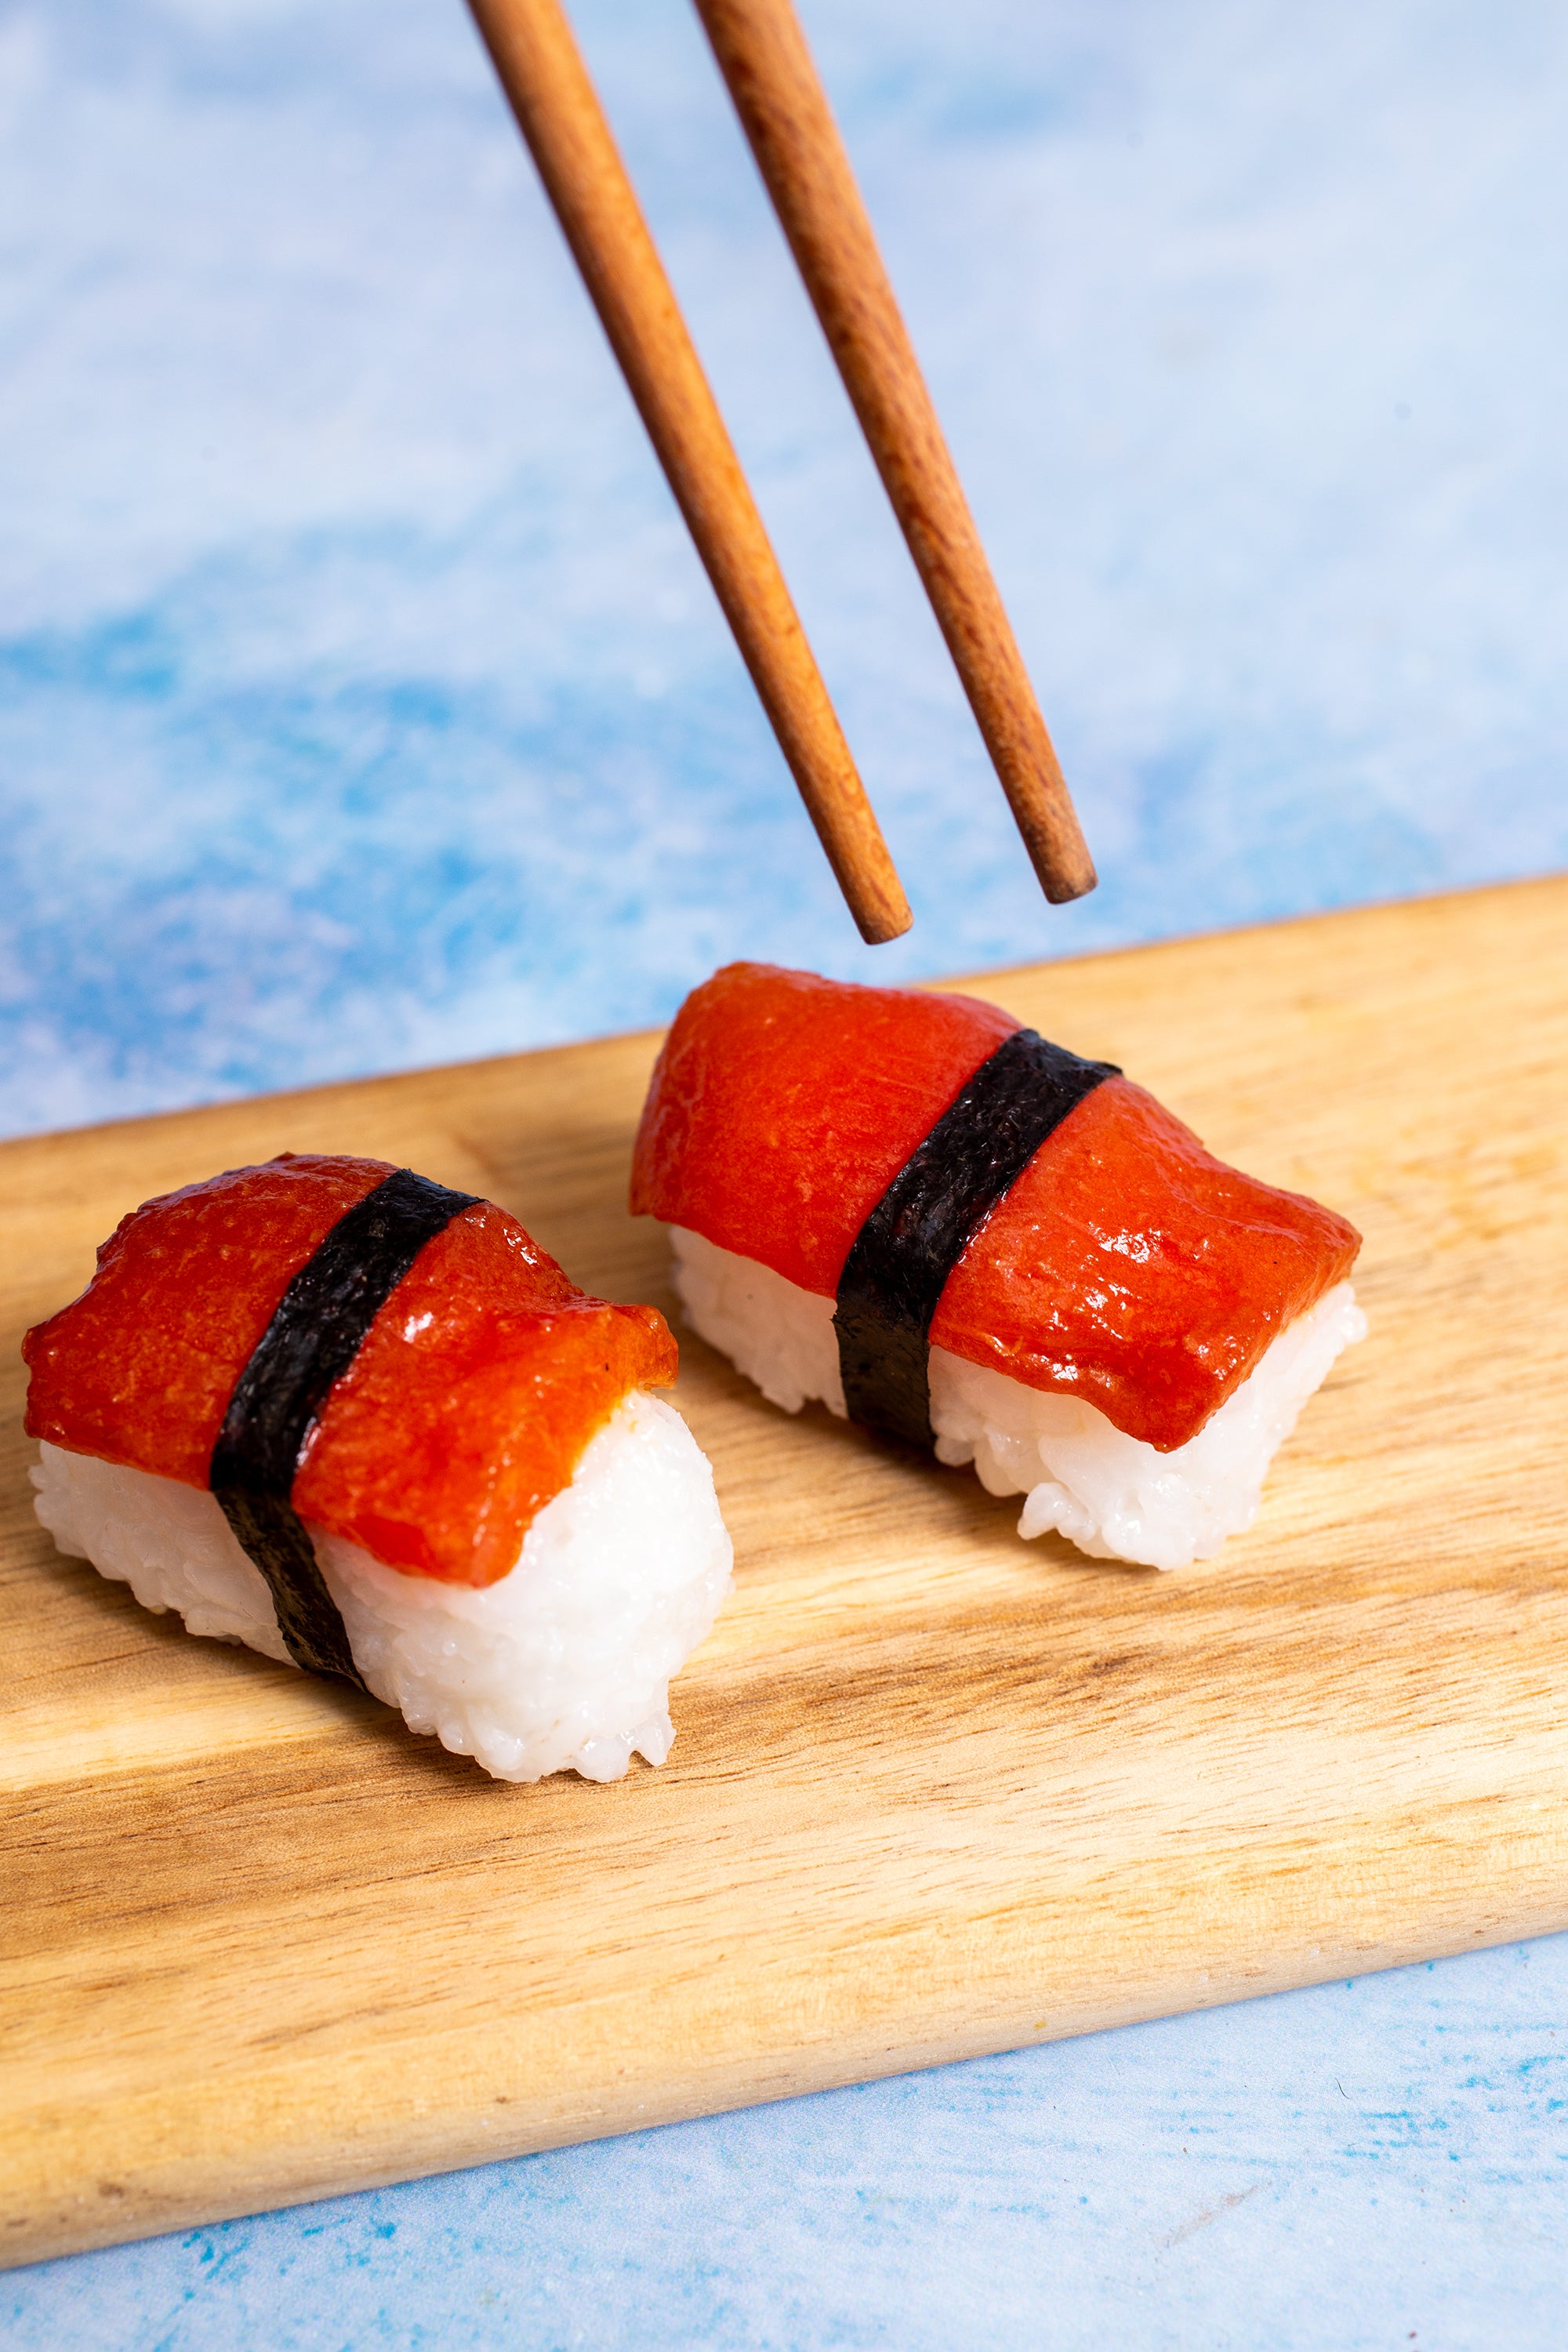 How to Make a Vegan Tuna Sushi Roll Using Marinated Watermelon